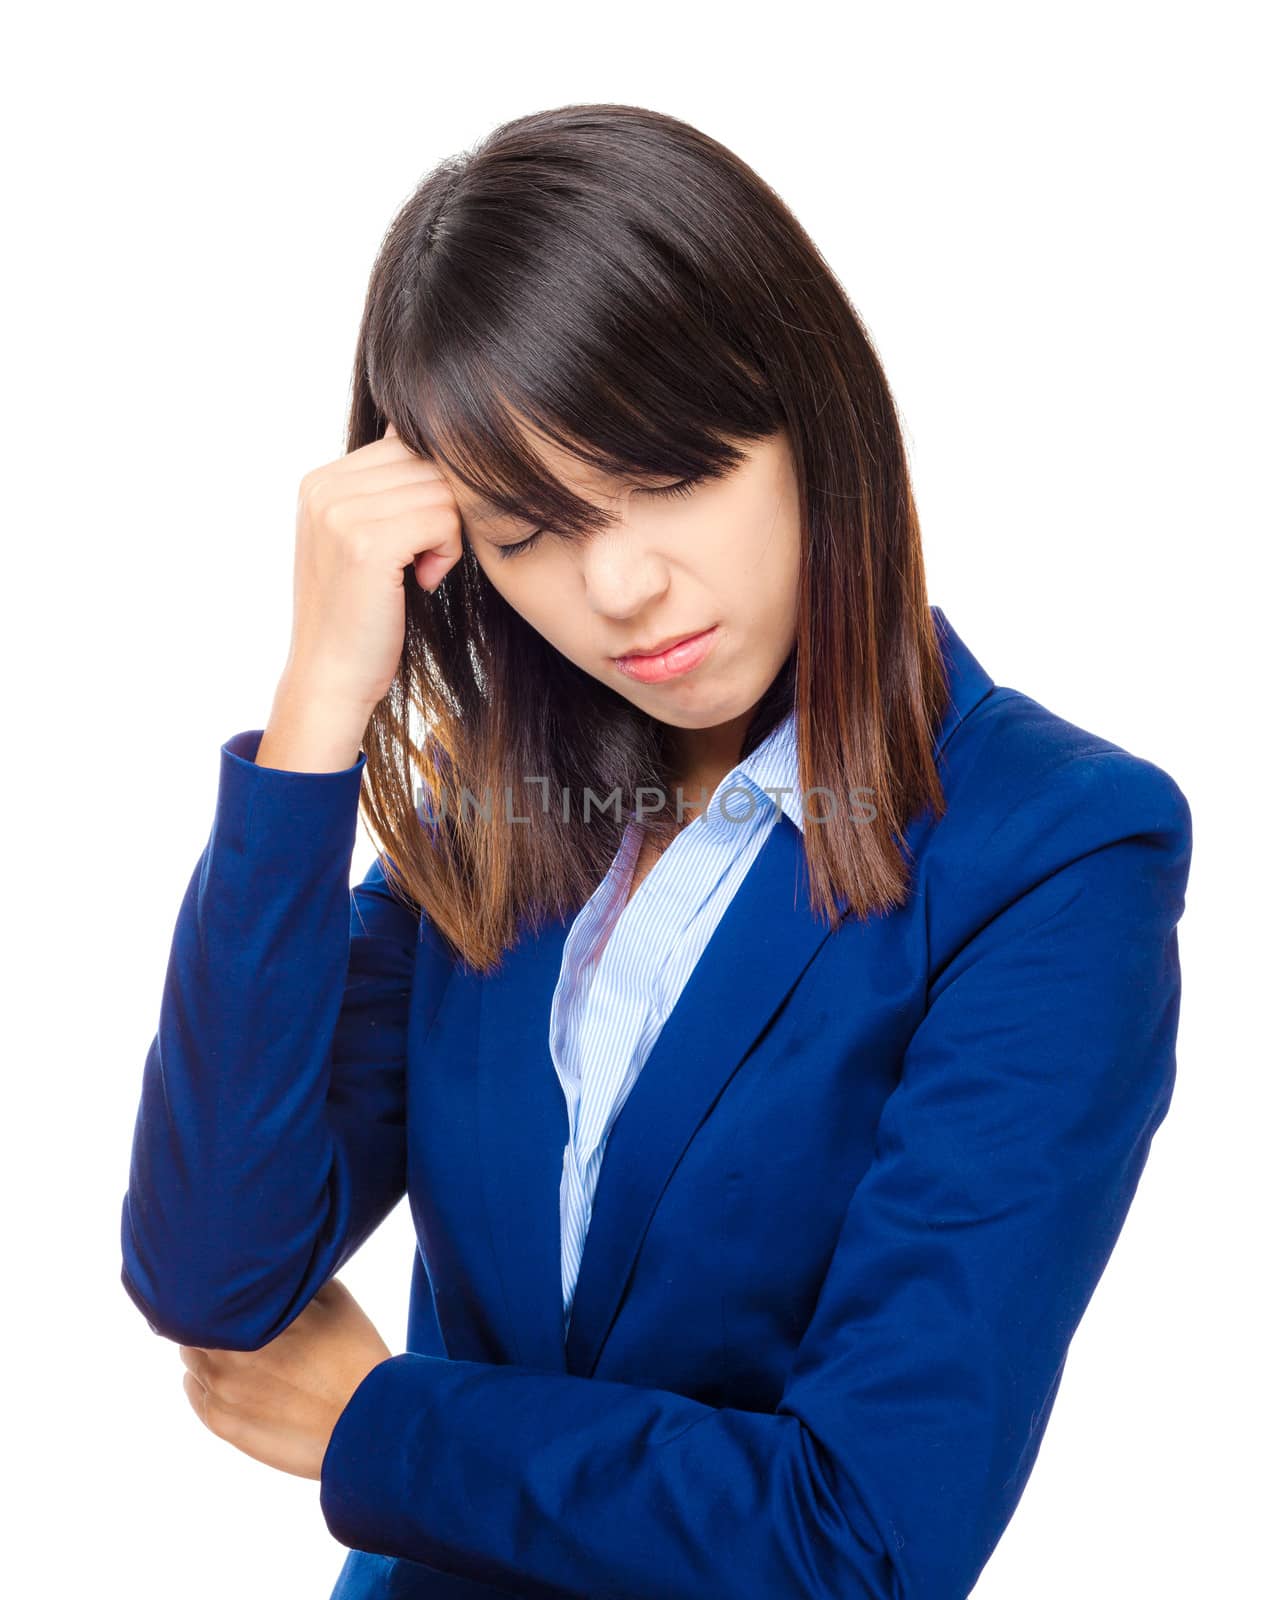 Asian business woman with serious headache by leungchopan